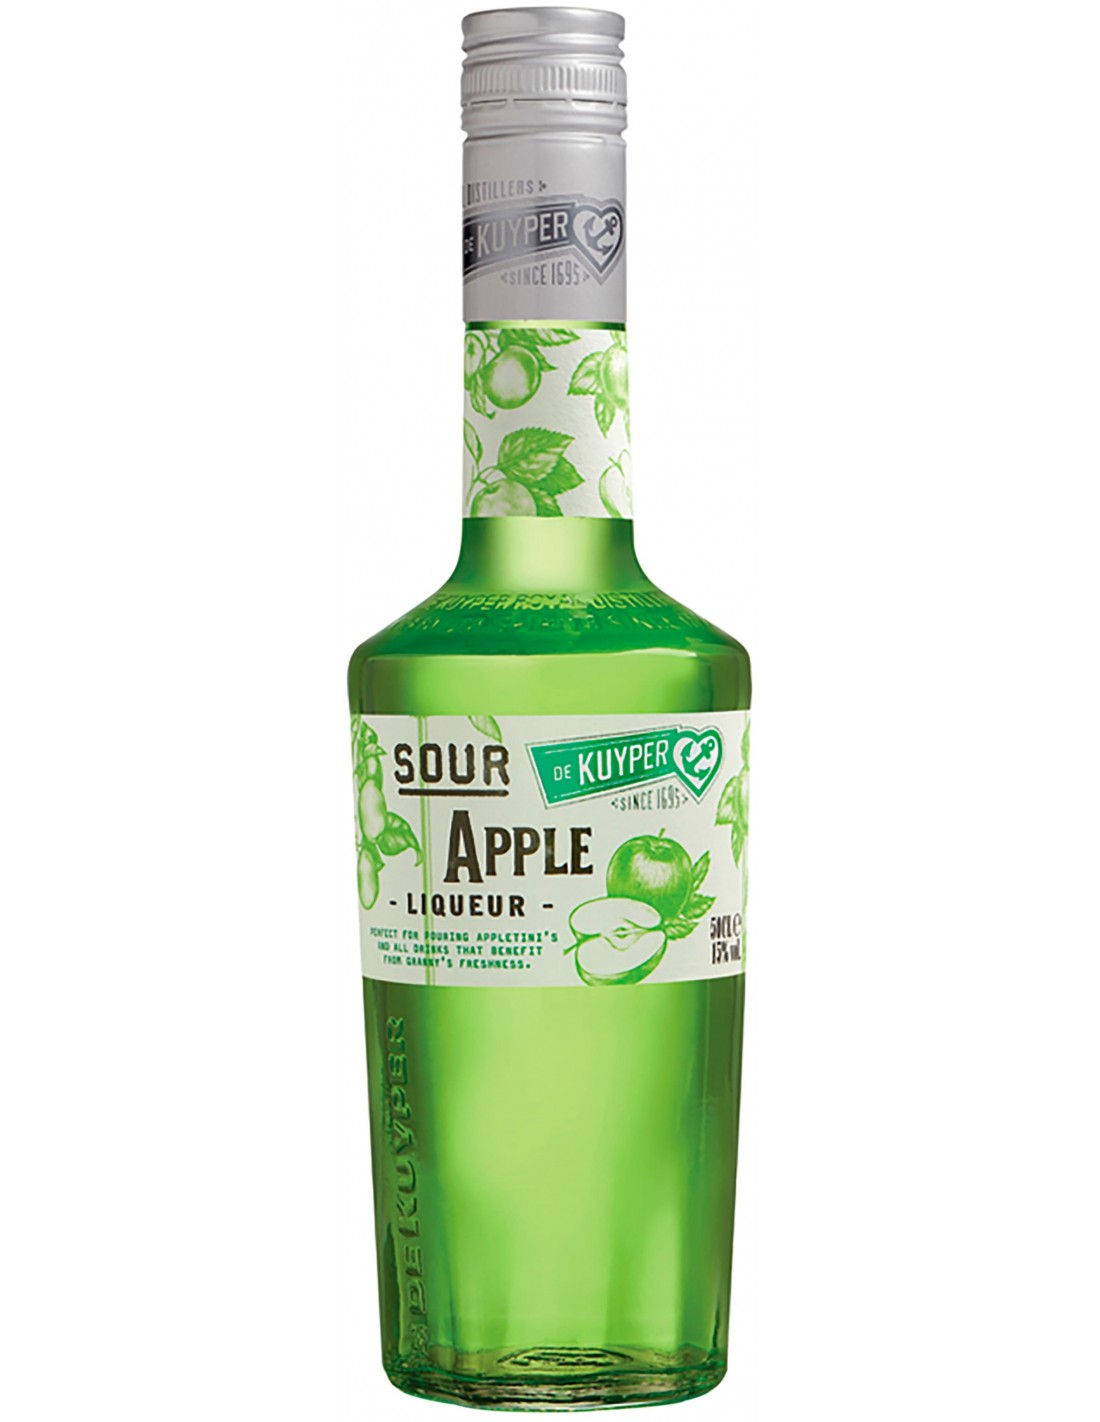 Lichior De Kuyper Sour Apple 15% alc., 0.7L, Olanda alcooldiscount.ro